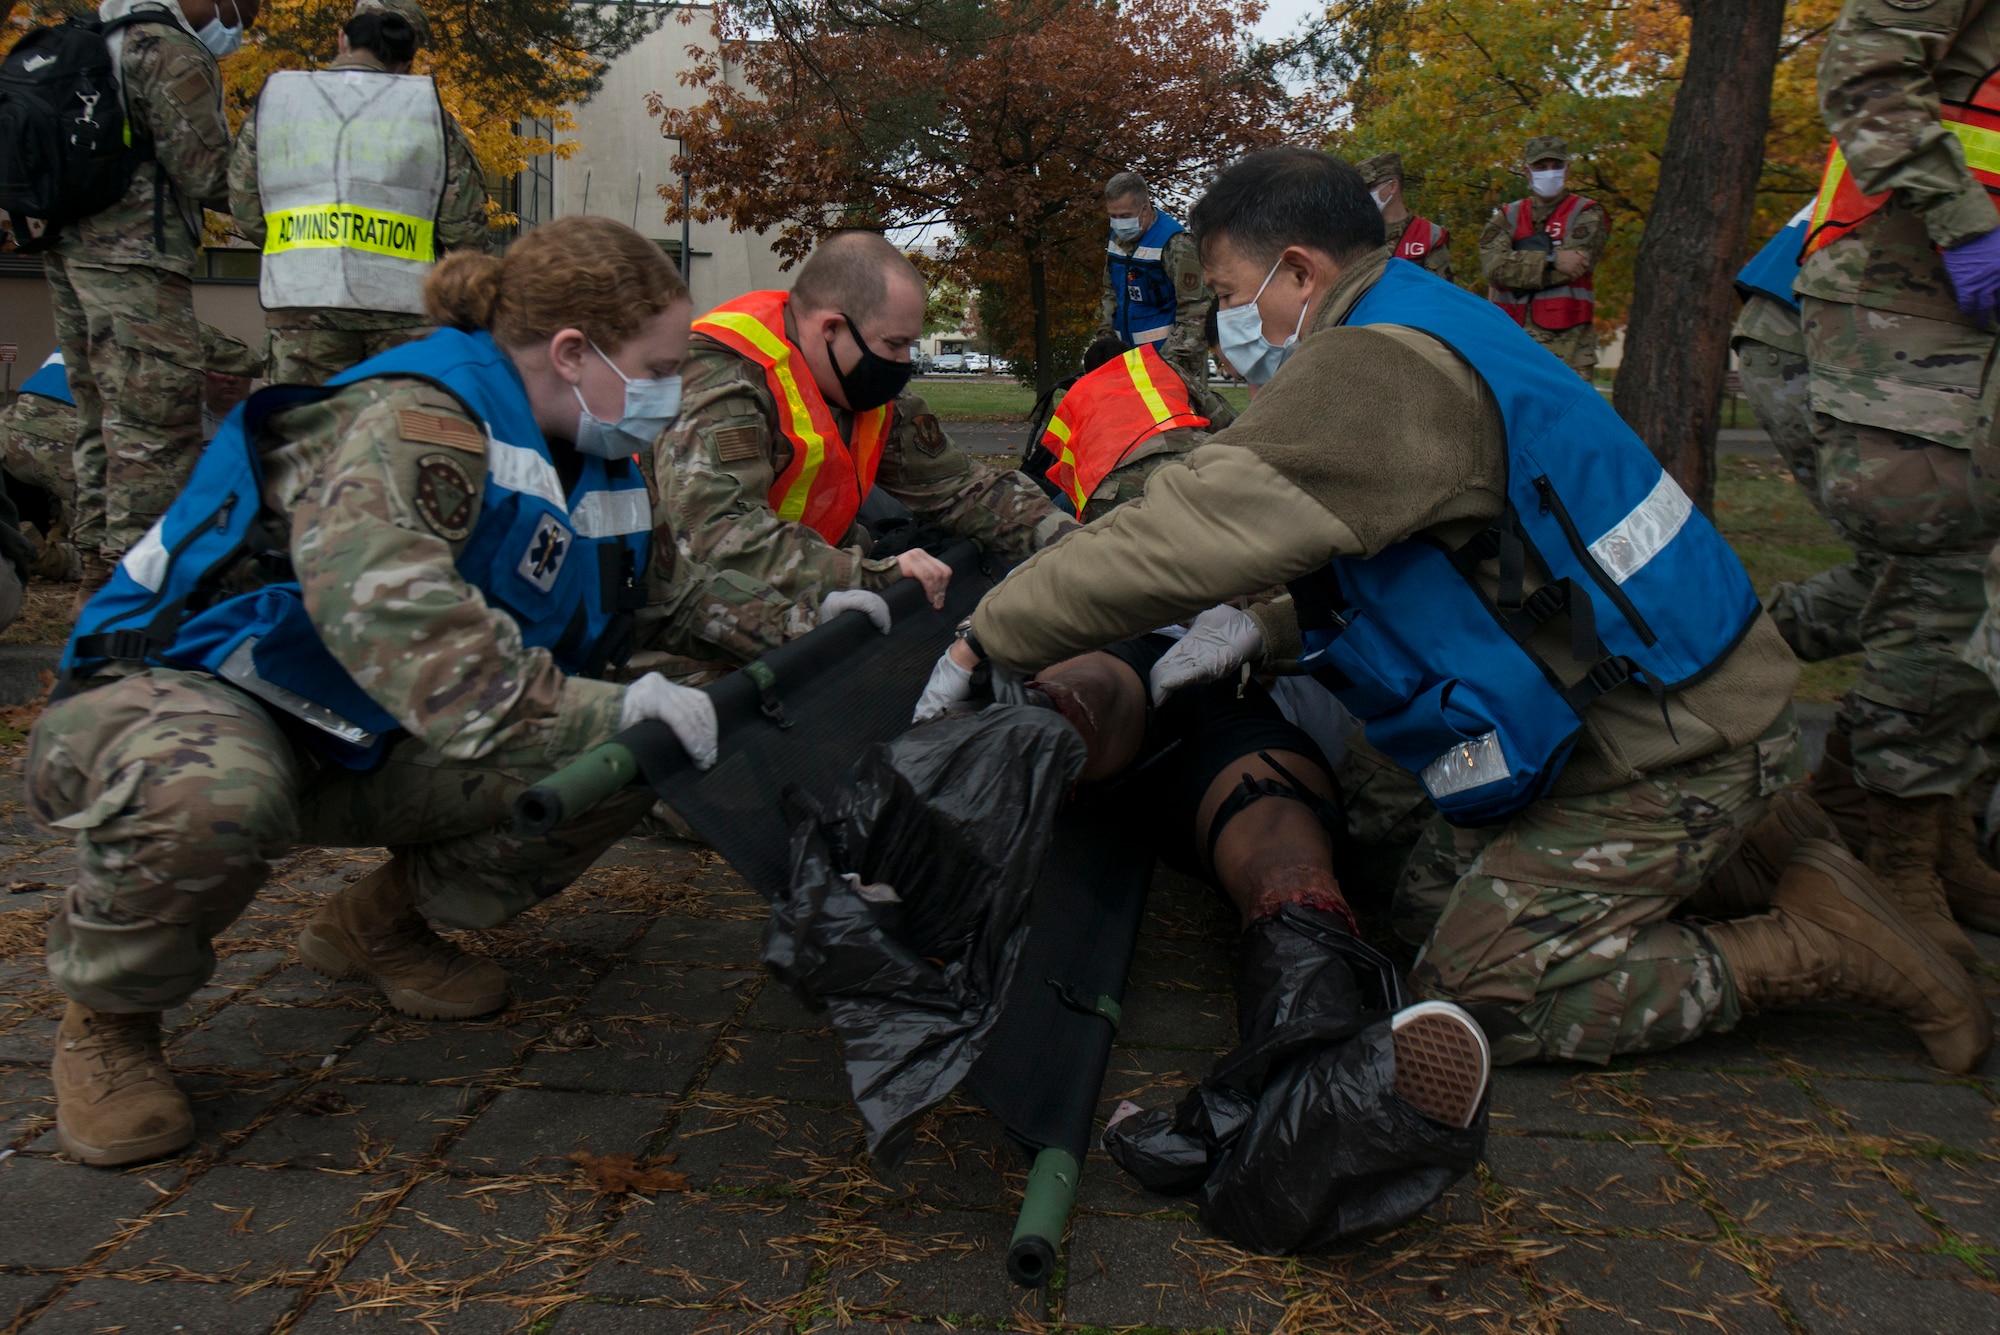 Medical Airmen transfer a simulated victim to a stretcher.